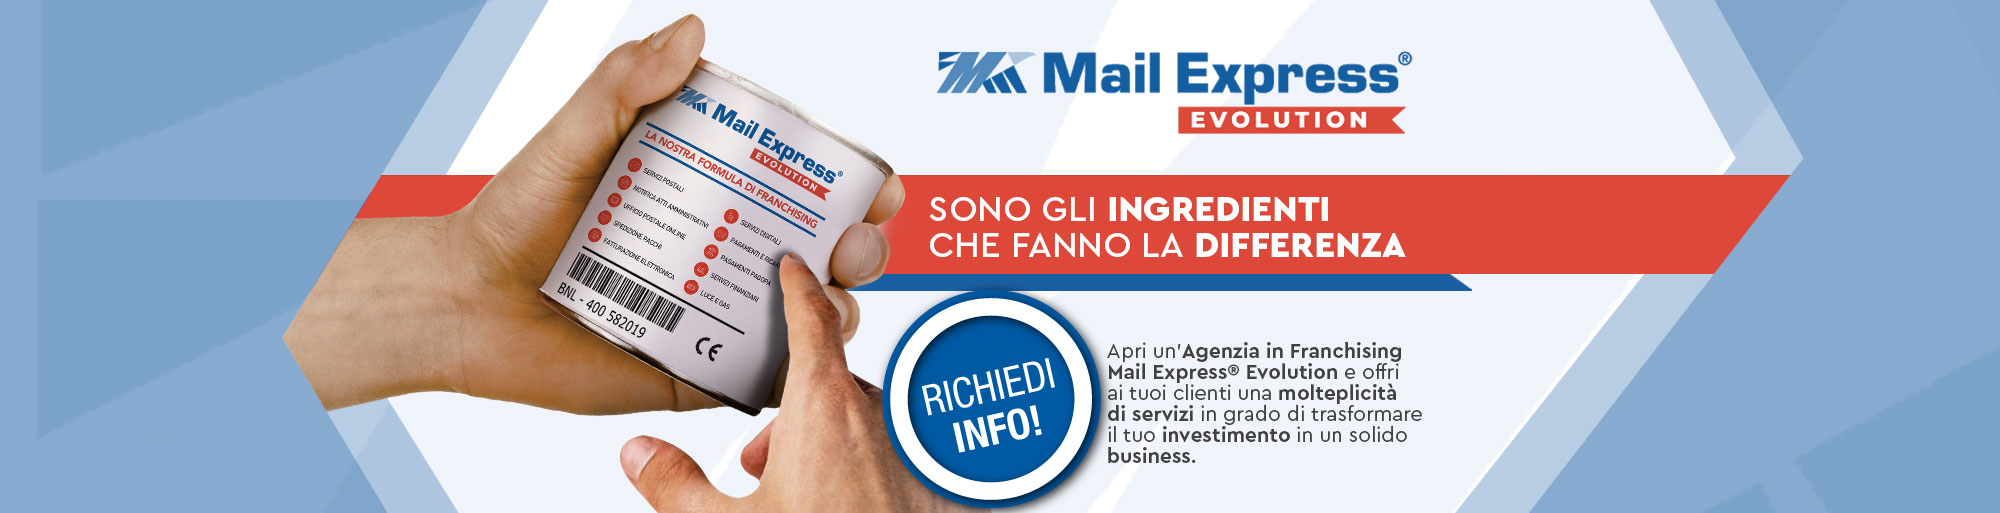 franchising Mail Express Evolution